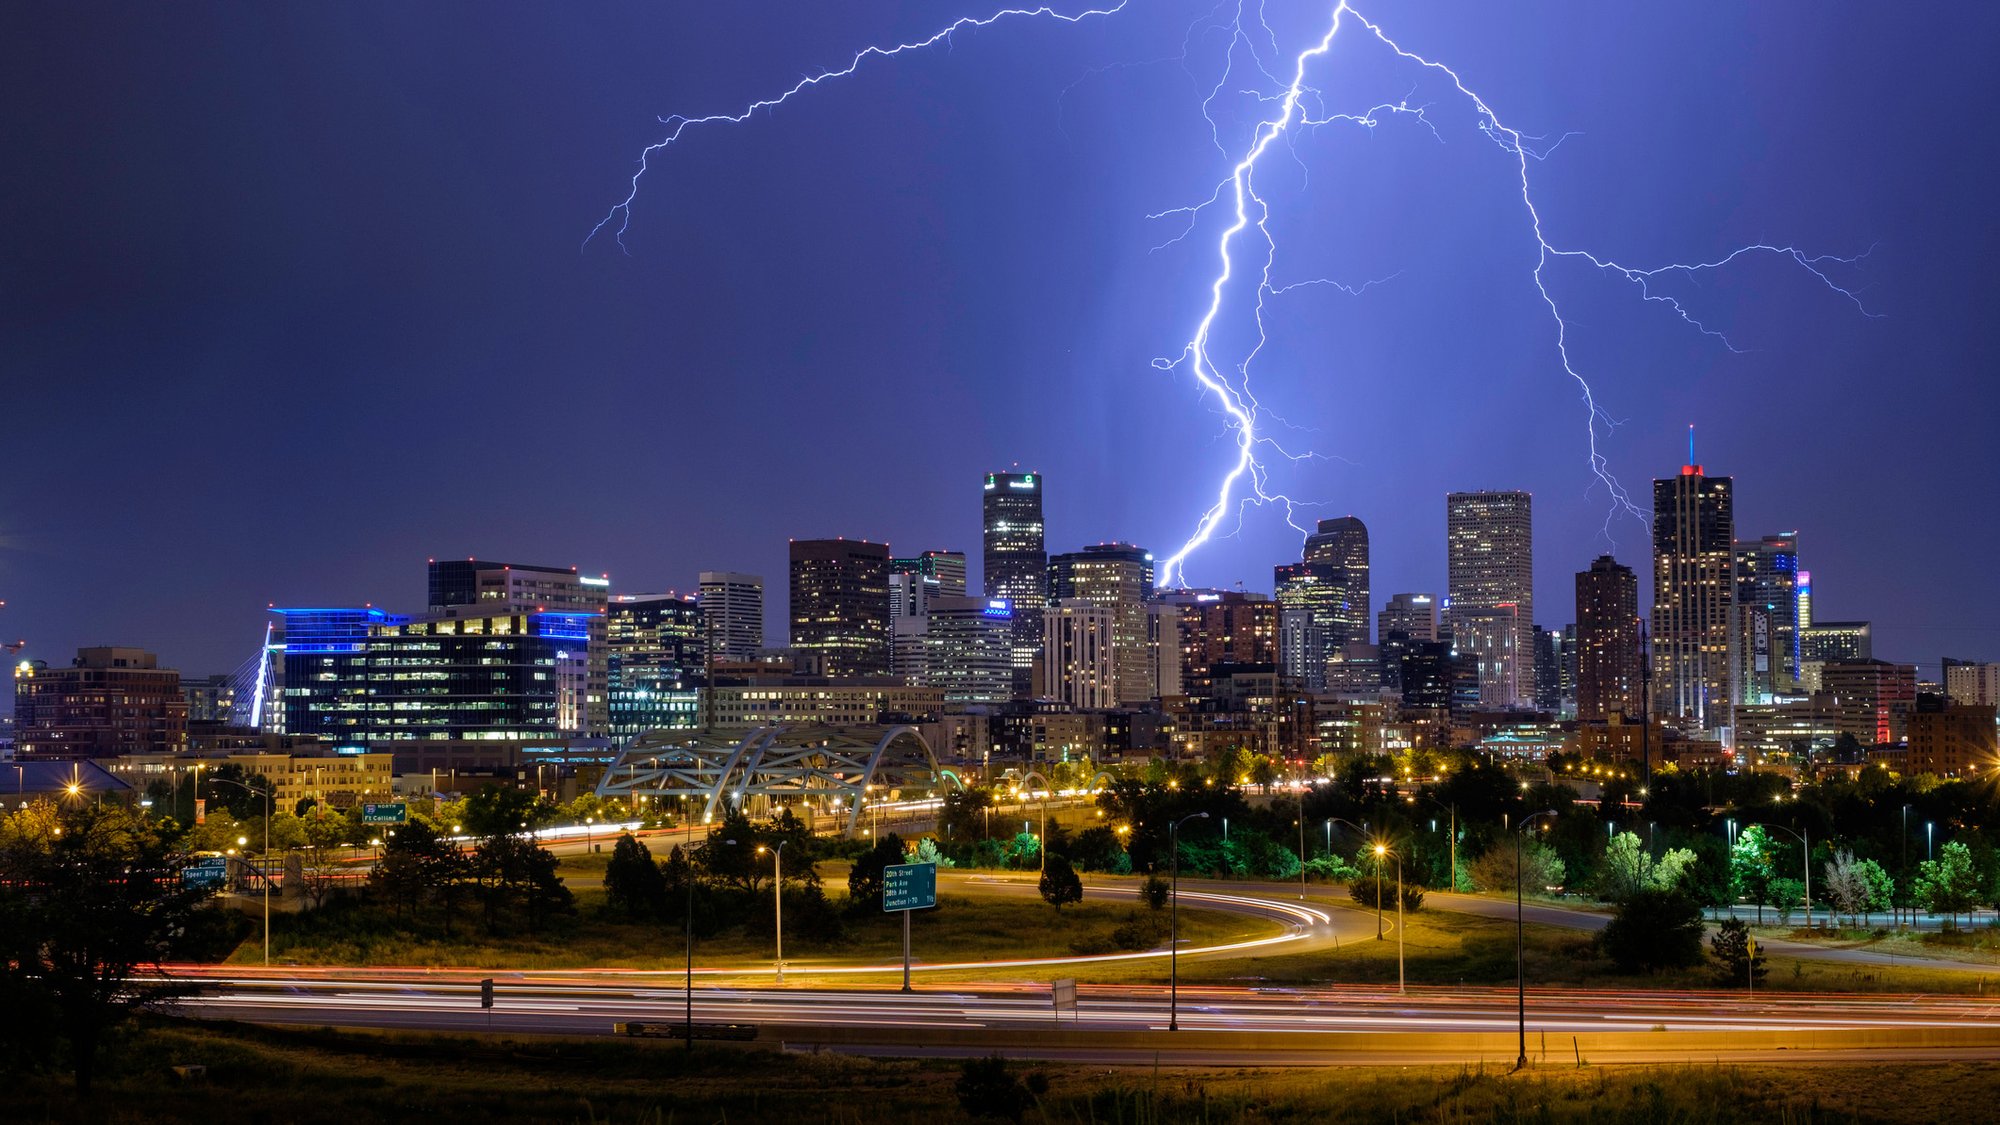 Lightning over a city